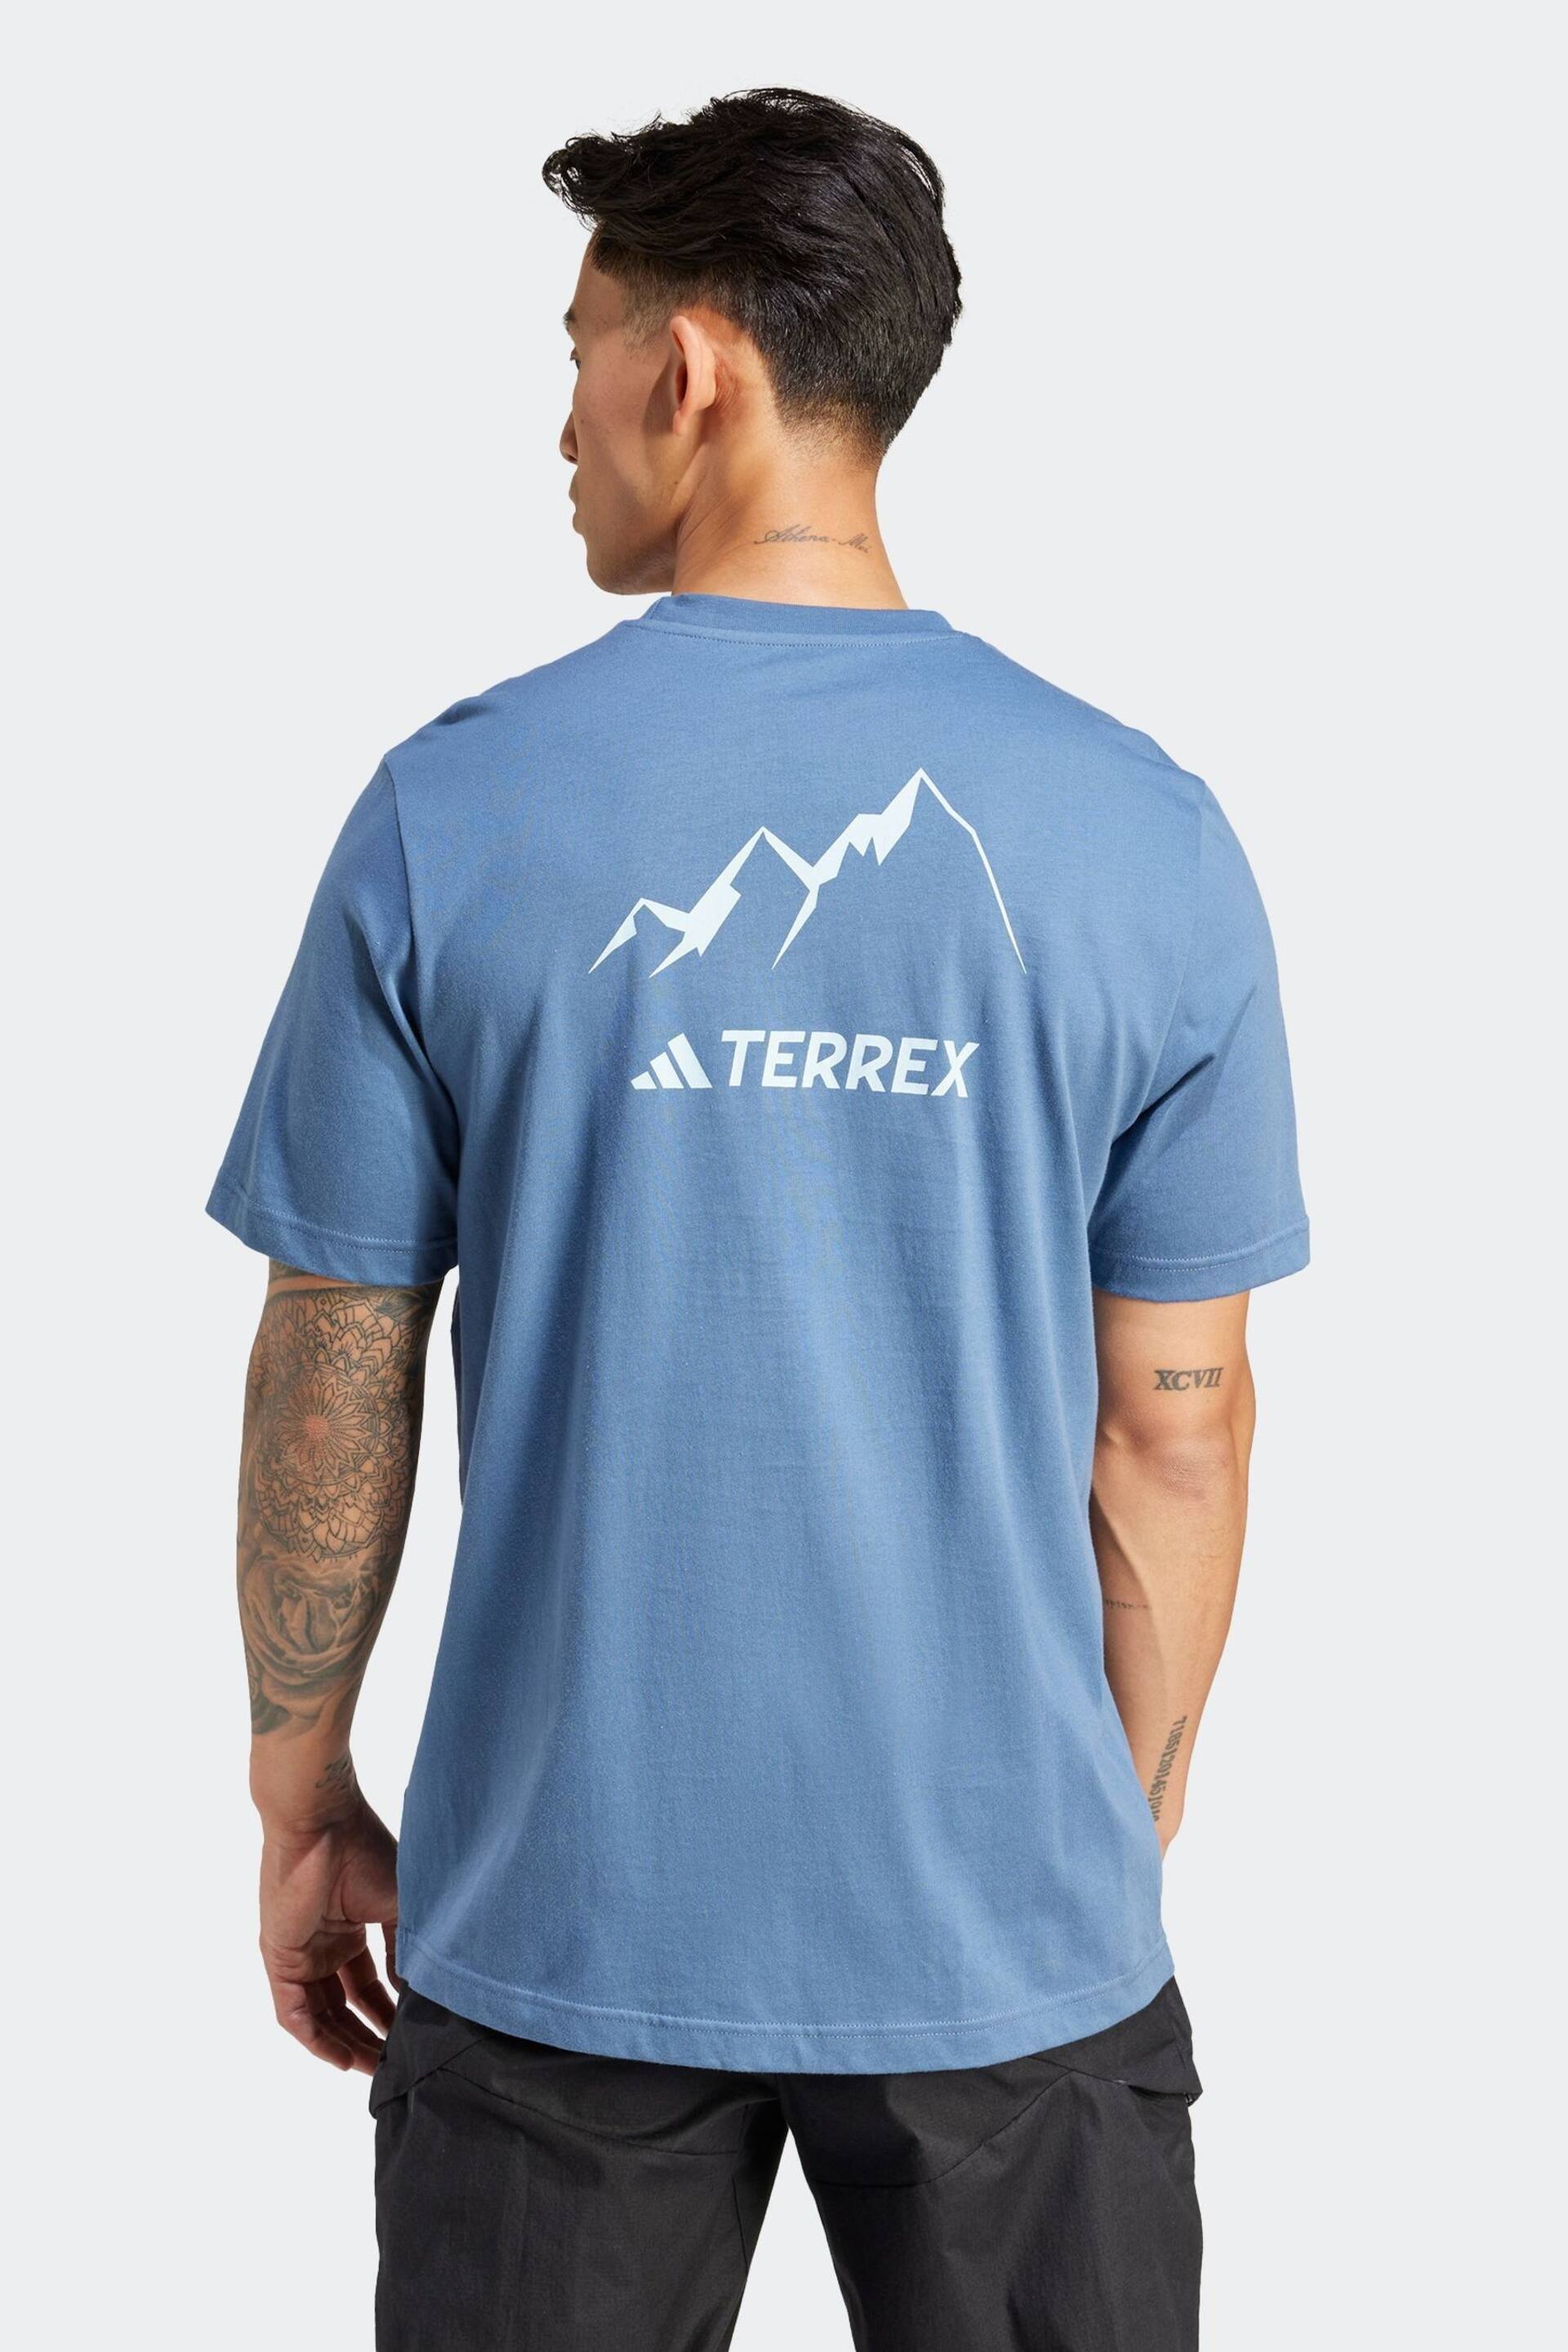 adidas Terrex Khaki Green Graphic T-Shirt - Image 2 of 7